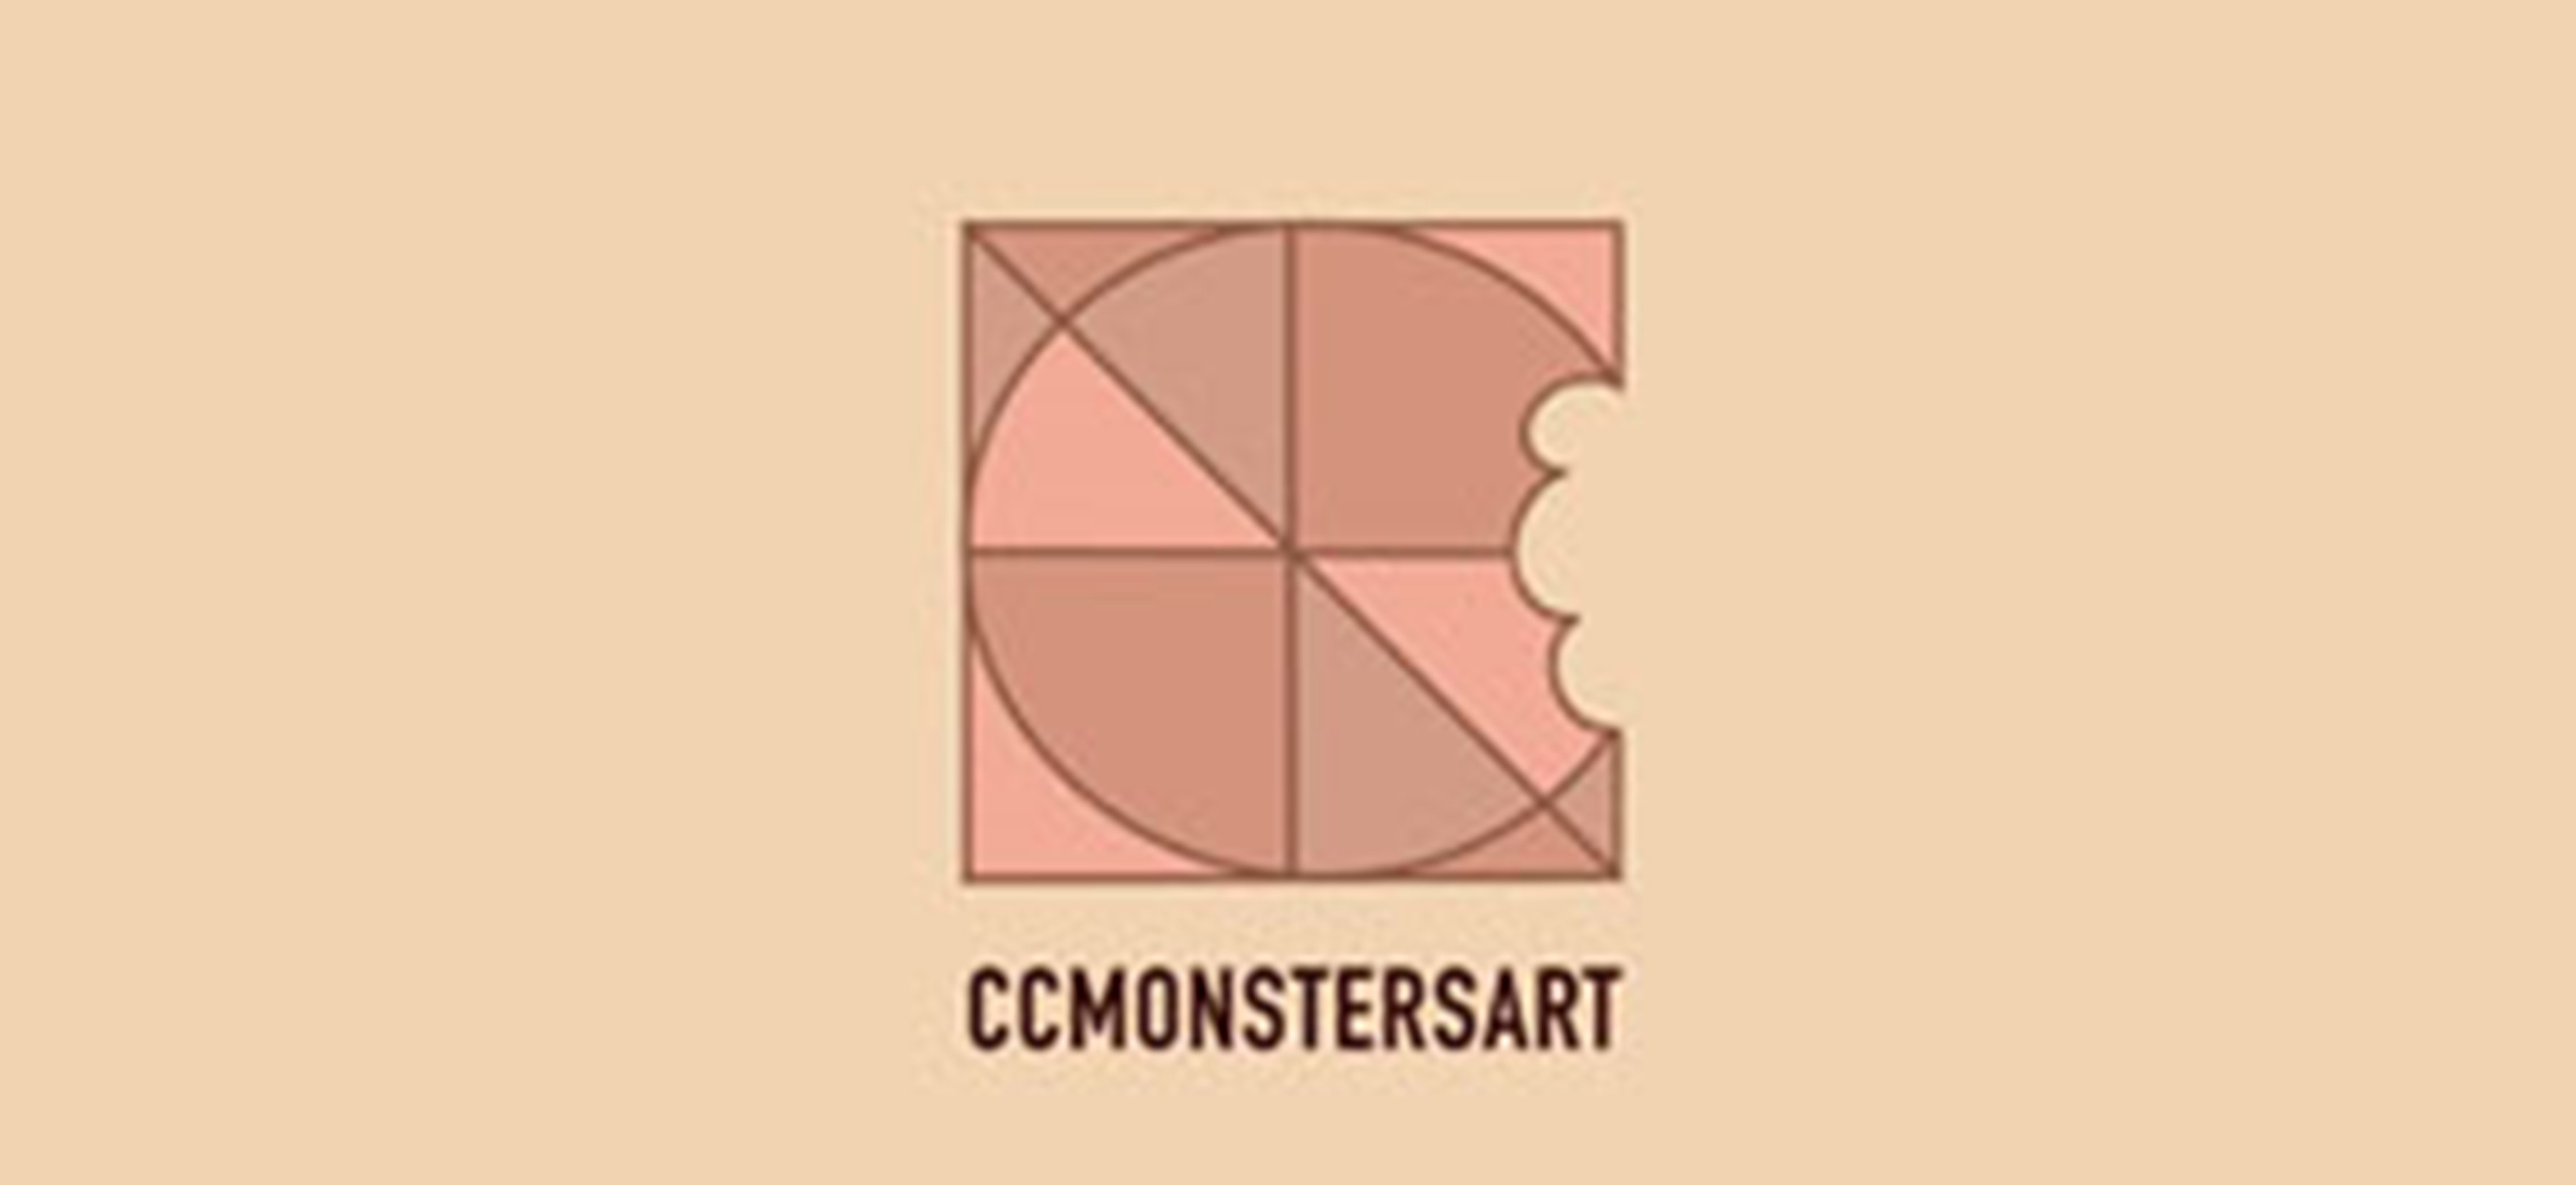 ccmonstersart